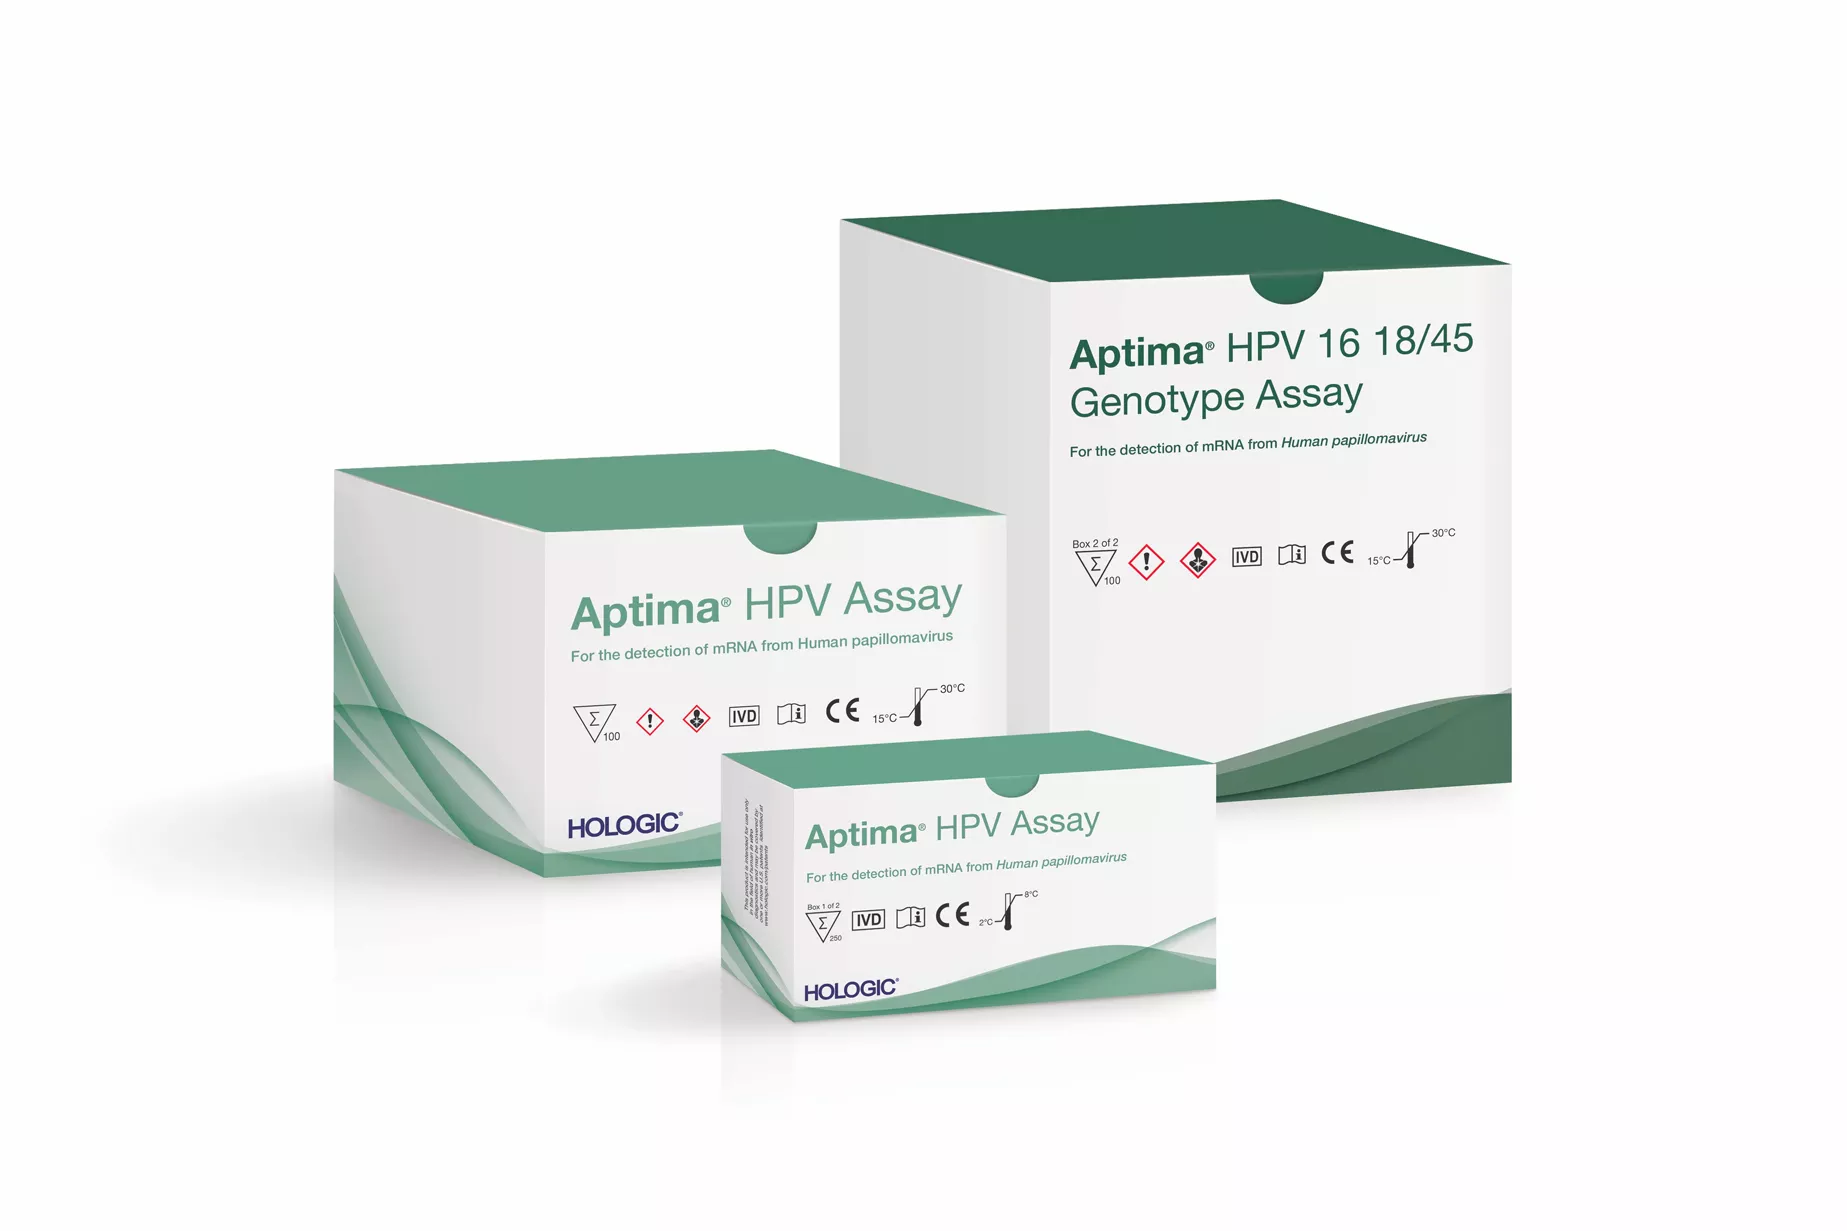 Aptima HPV assay boxes on white background